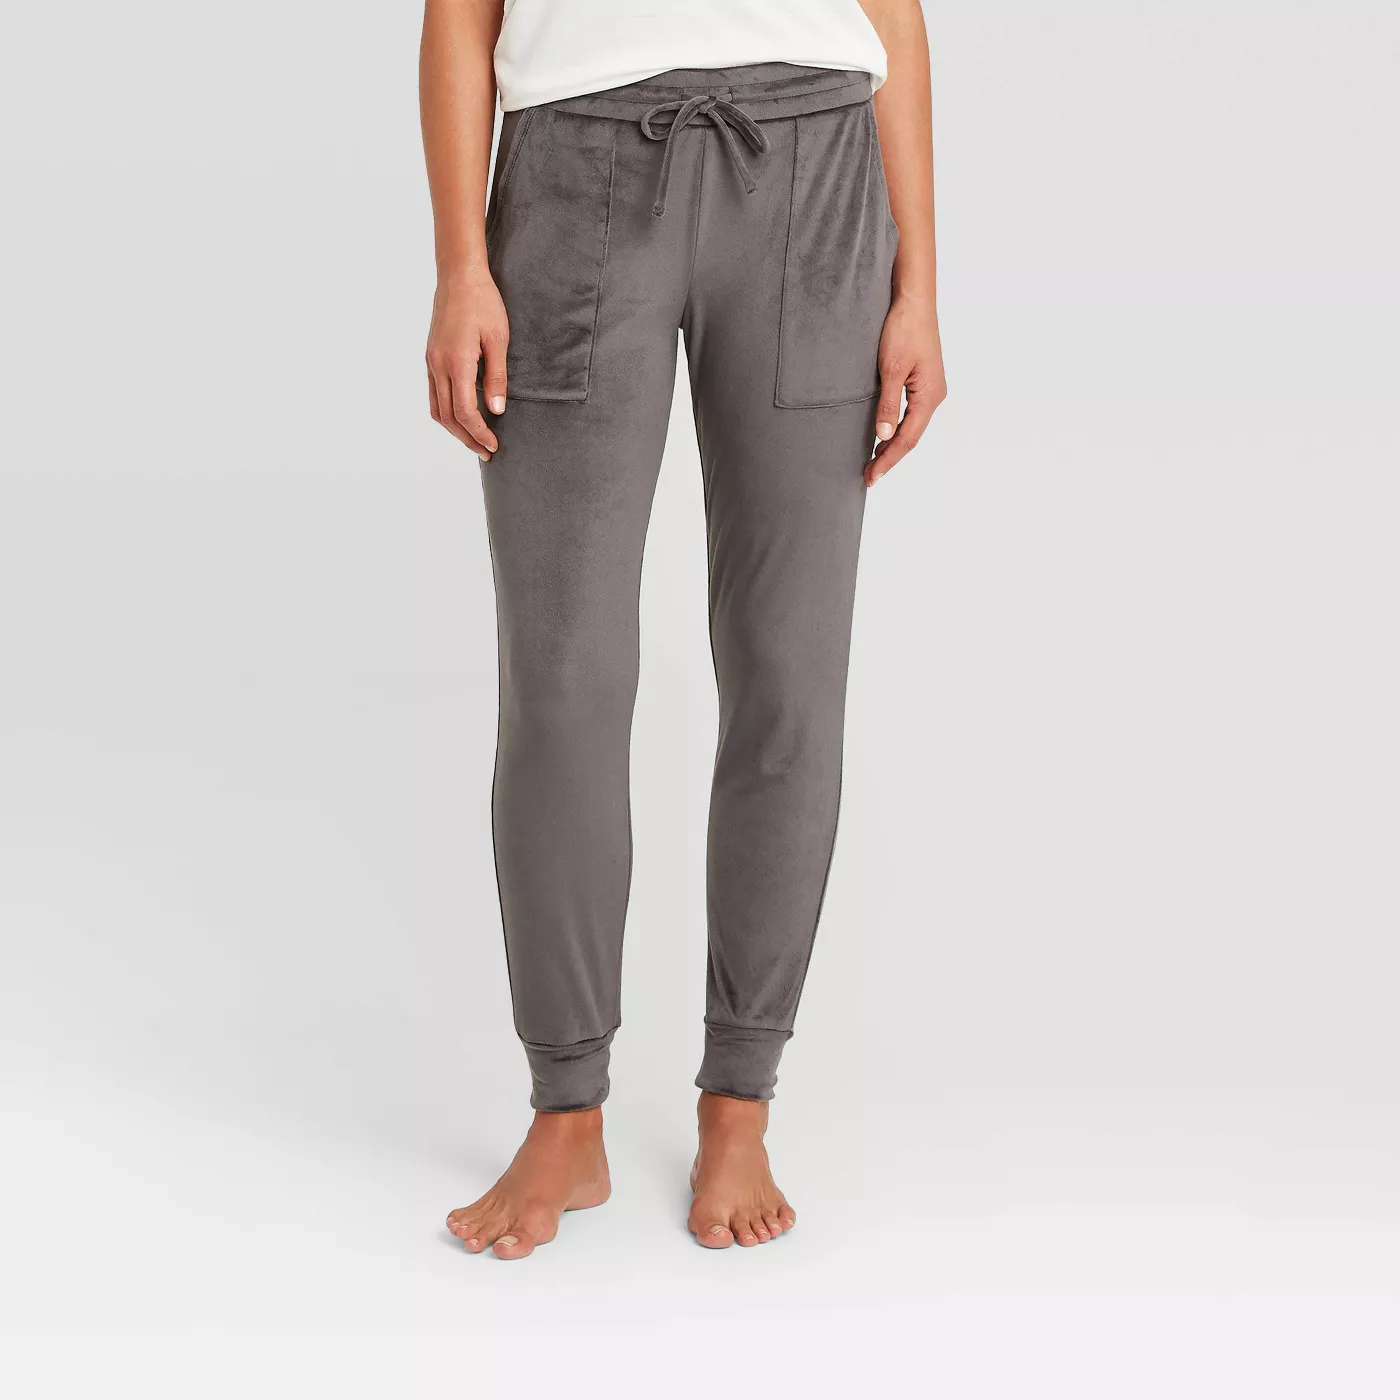 Women's Cozy Fleece Lounge Pajama Pants - Stars Above™ - image 1 of 6